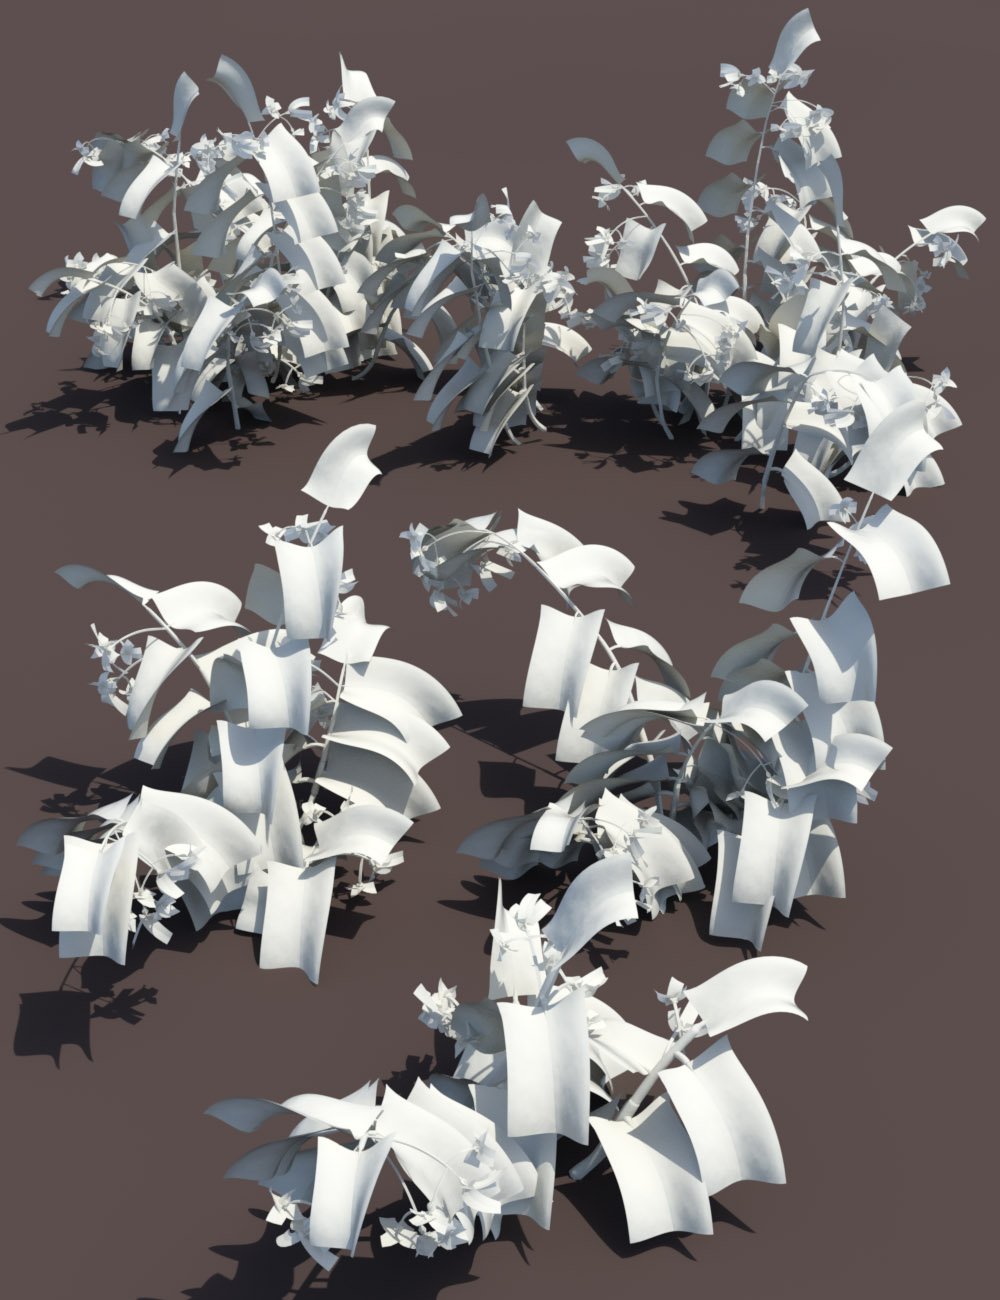 Tropical Flowers - Dragon Wing Begonia Plants by: MartinJFrost, 3D Models by Daz 3D